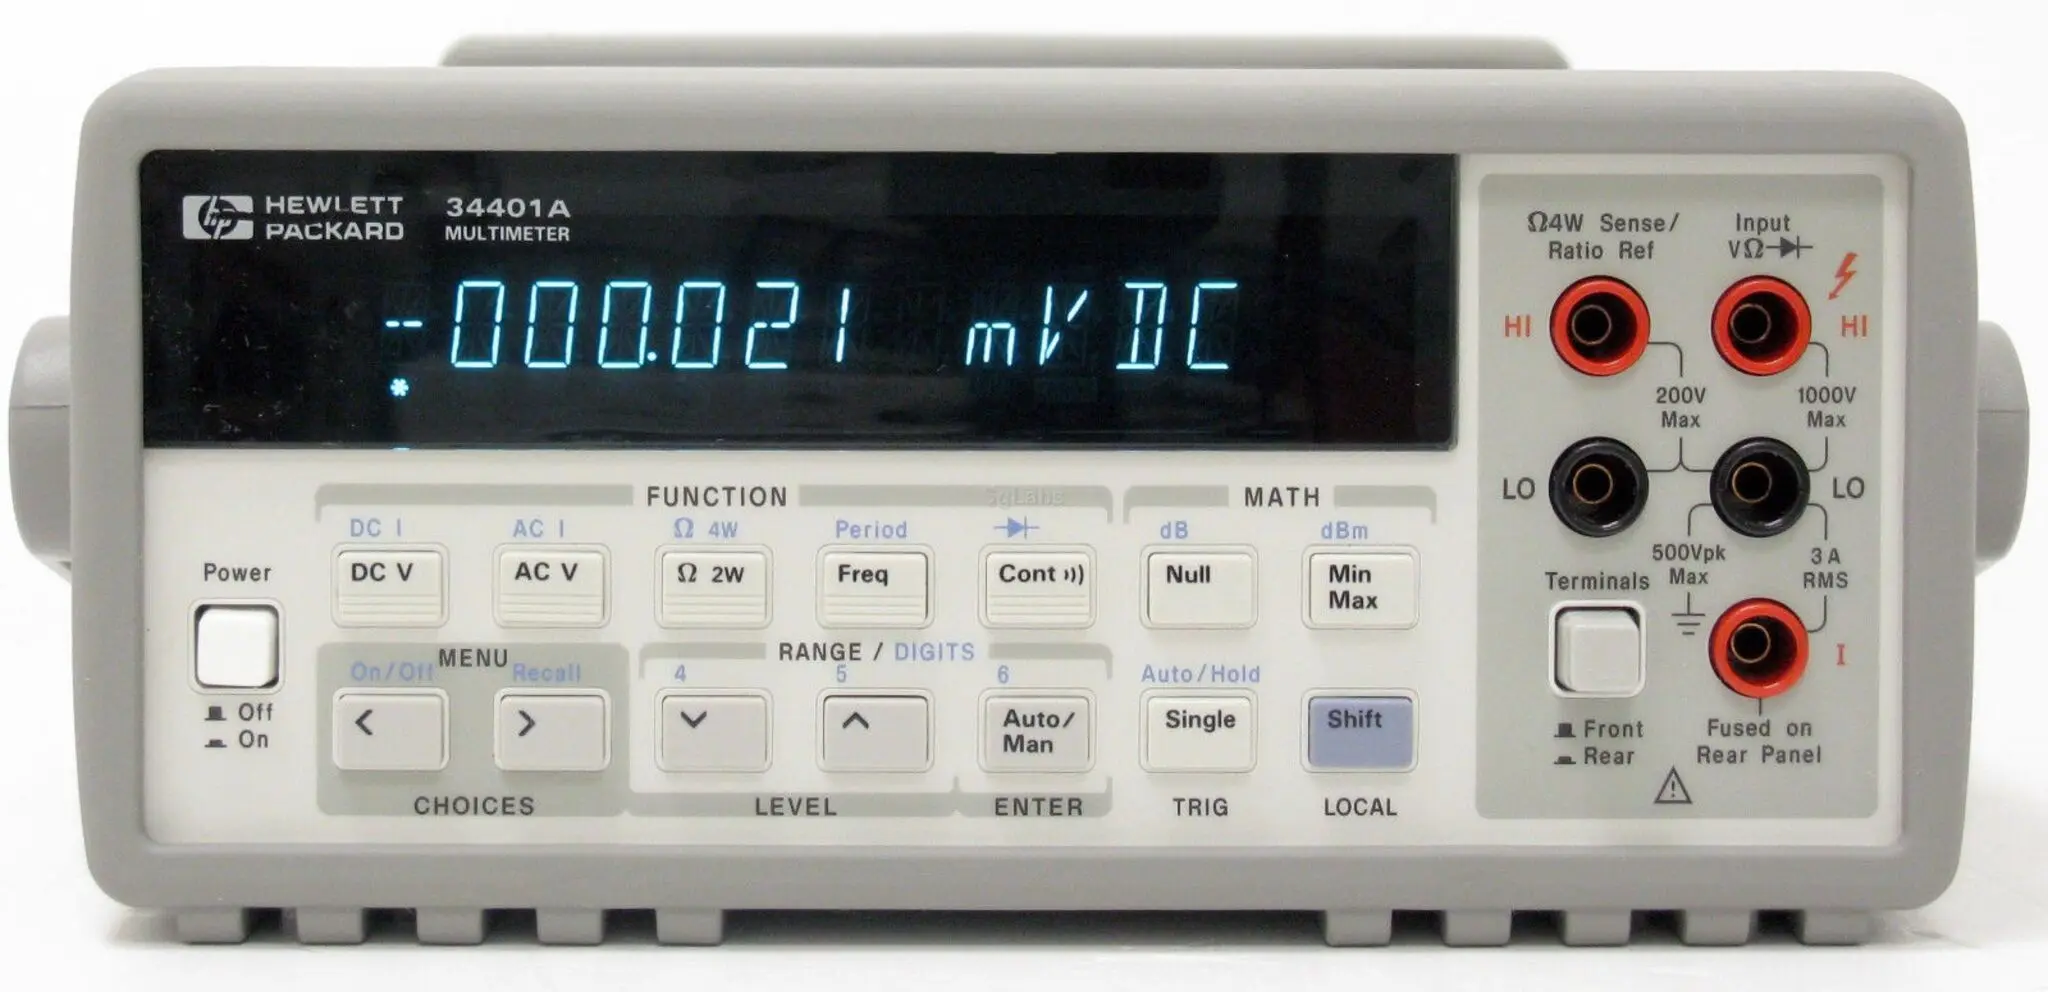 hewlett packard 34401a digital multimeter - What is the burden voltage of 34401A